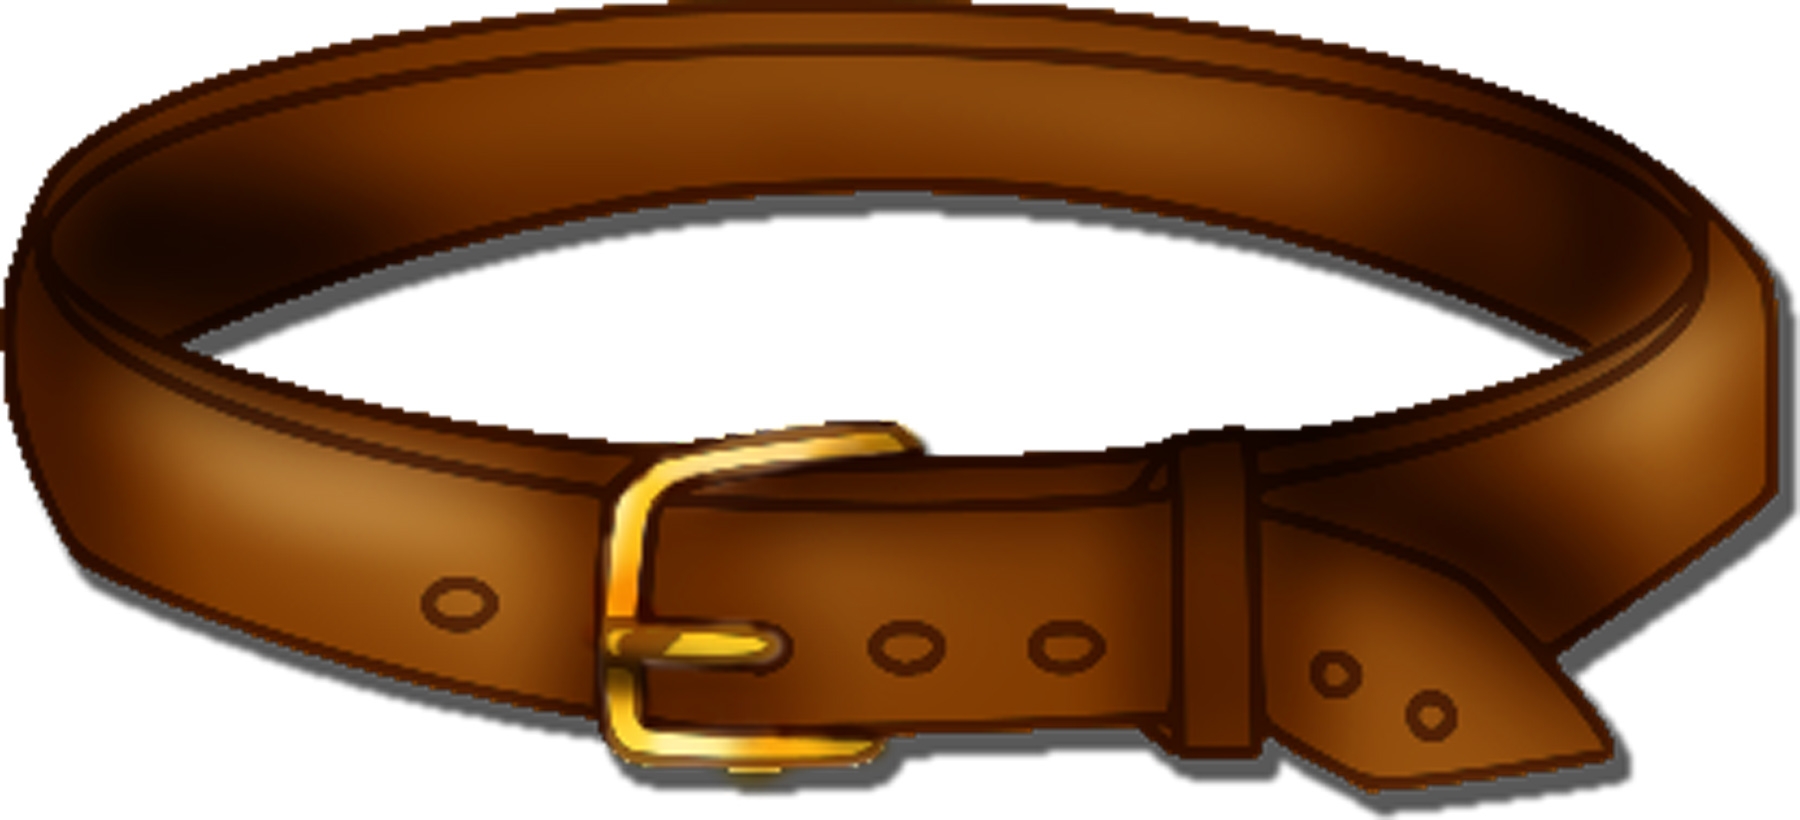 Belt clipart: Leather Belt